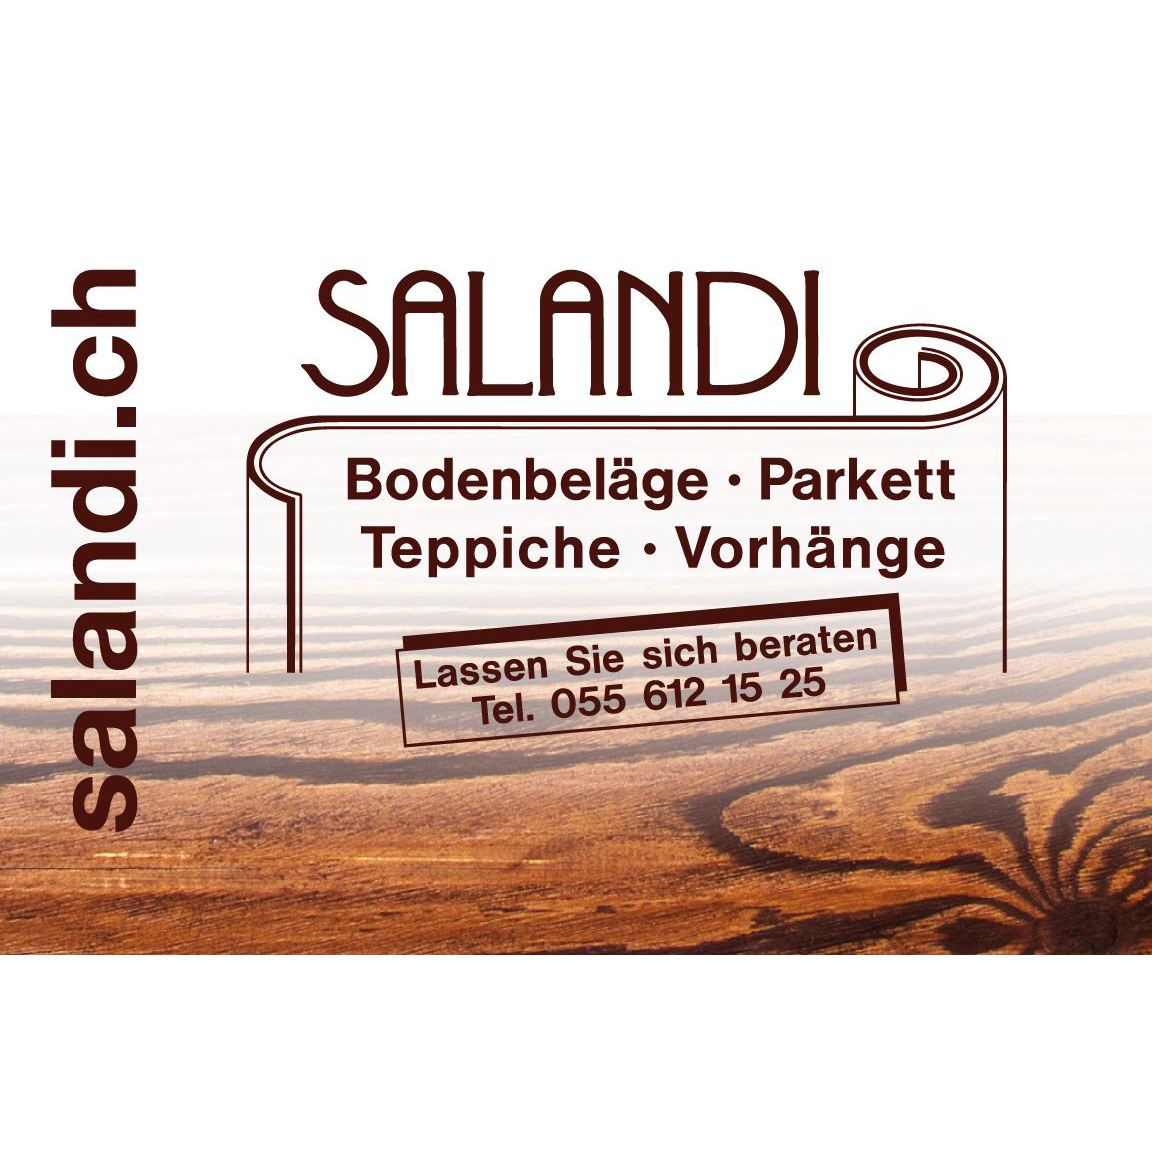 Salandi Bodenbeläge Logo